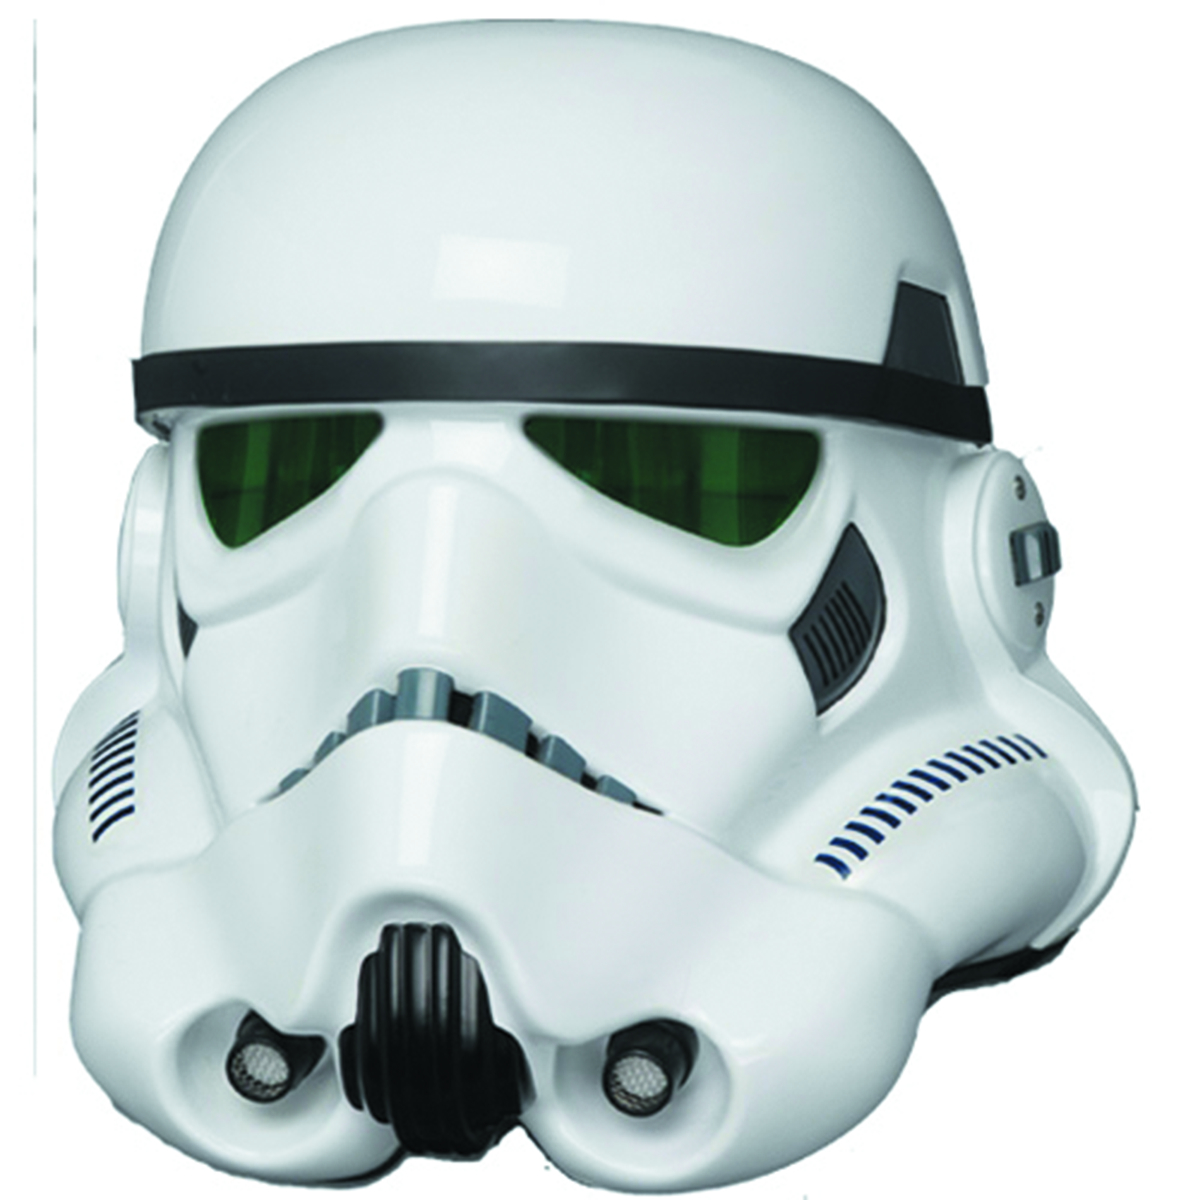 jan131756-efx-star-wars-stormtrooper-helmet-prop-replica-previews-world